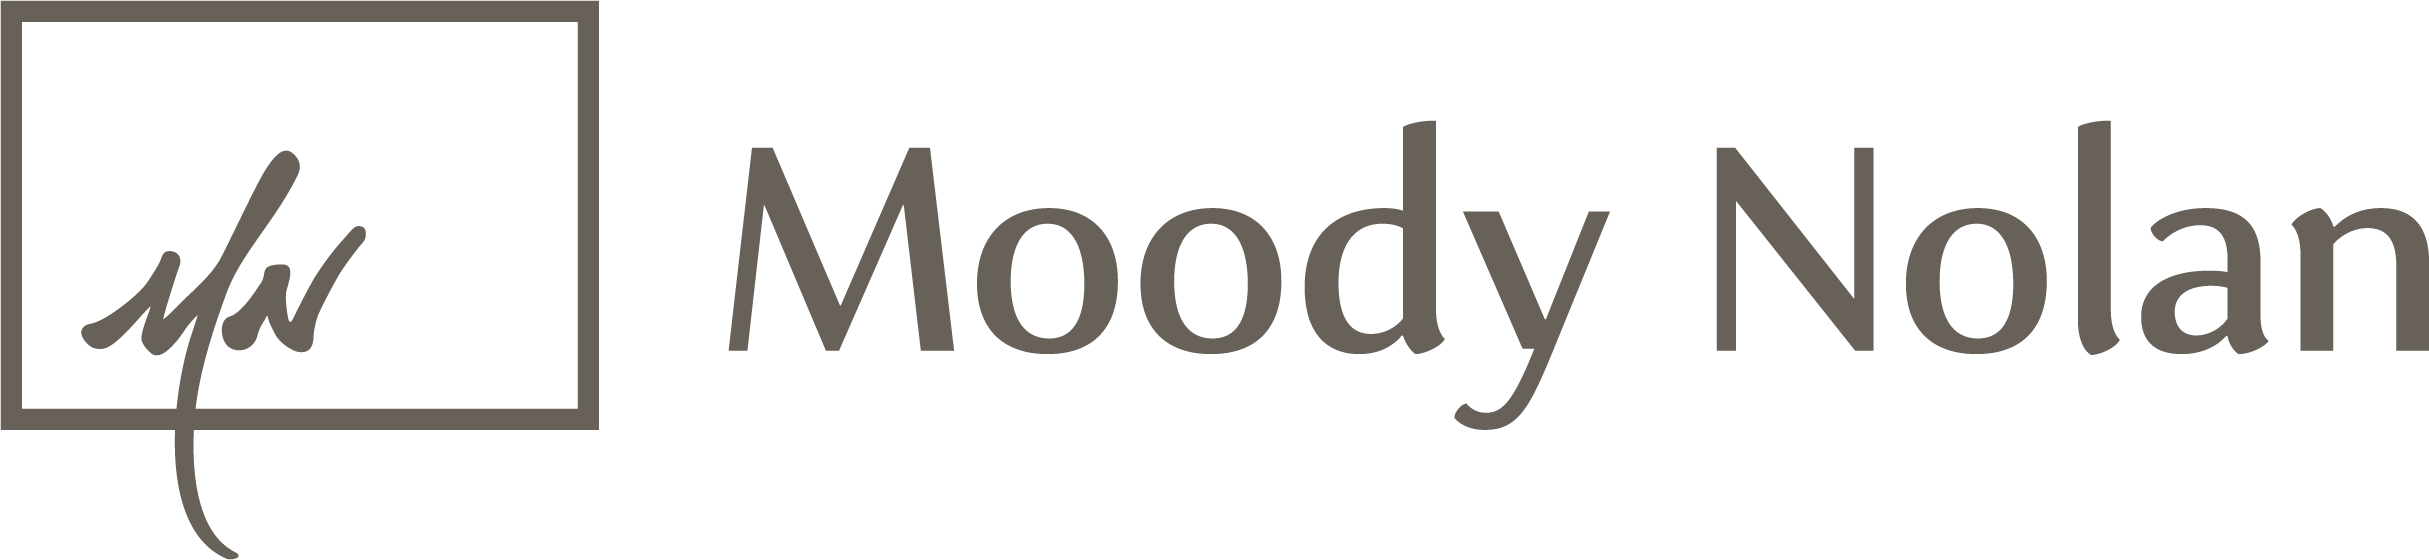 Moody Nolan Horizontal